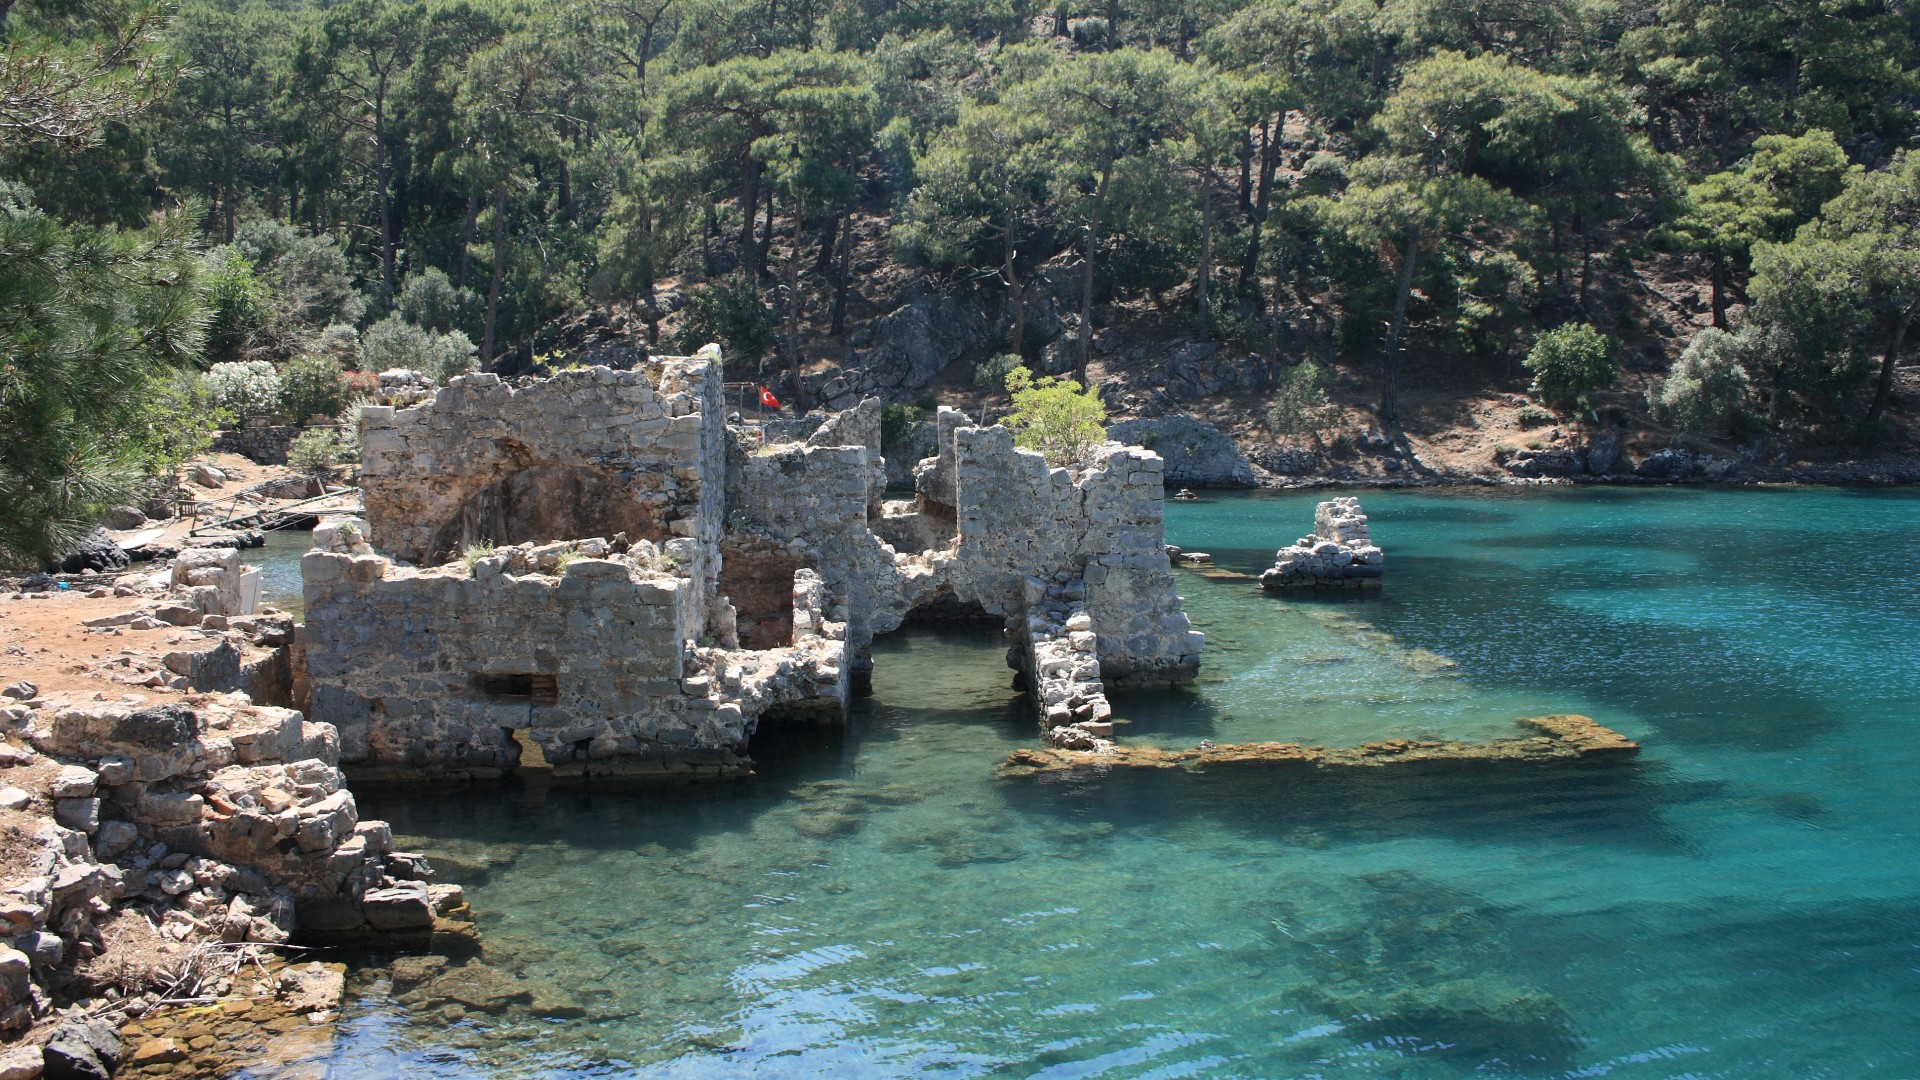 Sunken Roman bath found along the Turkish coast